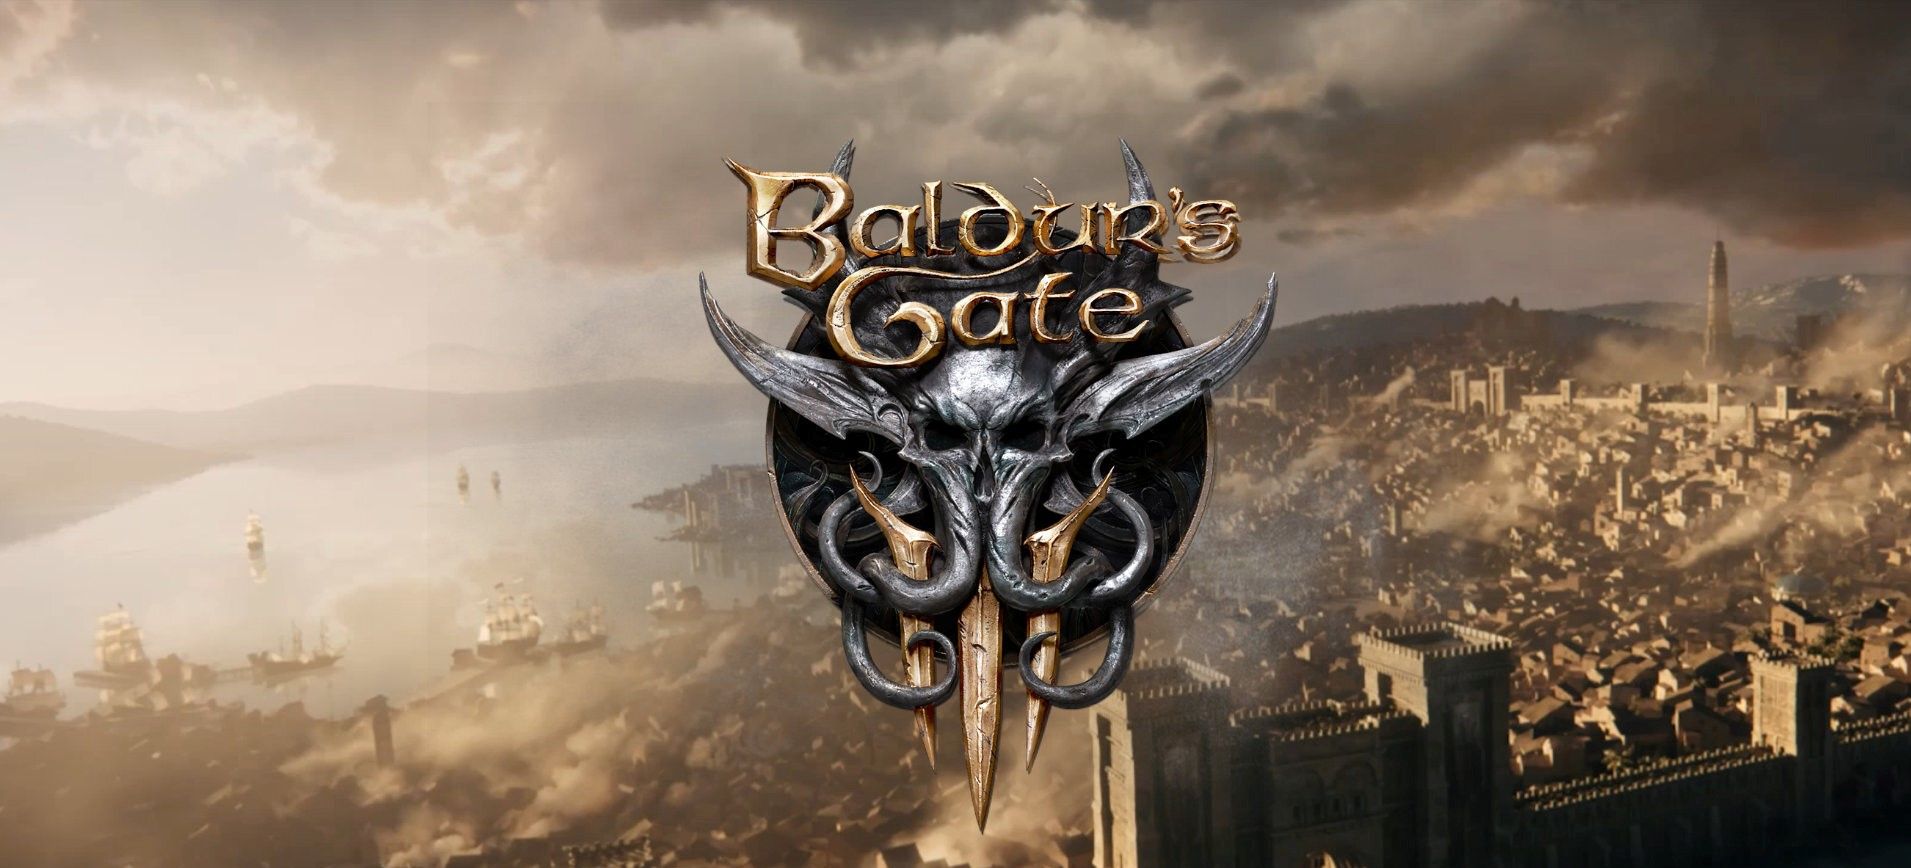 Baldur's Gate III We Know